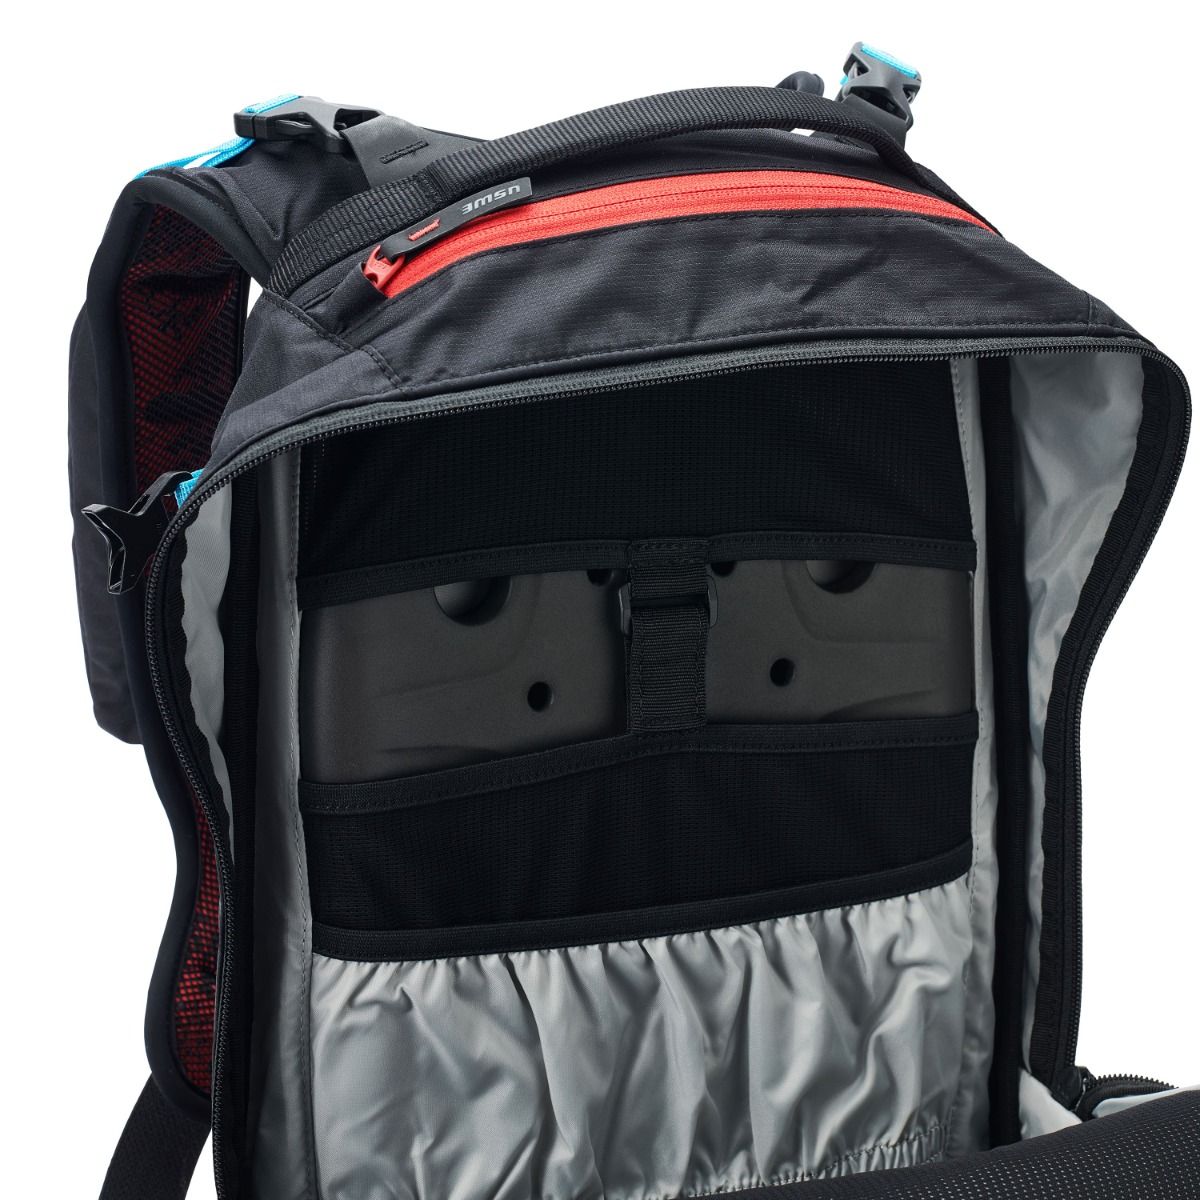 USWE Mochila Shred 16L, una mochila de gama alta para MTB, E-MTB, bicicleta  de montaña, azul